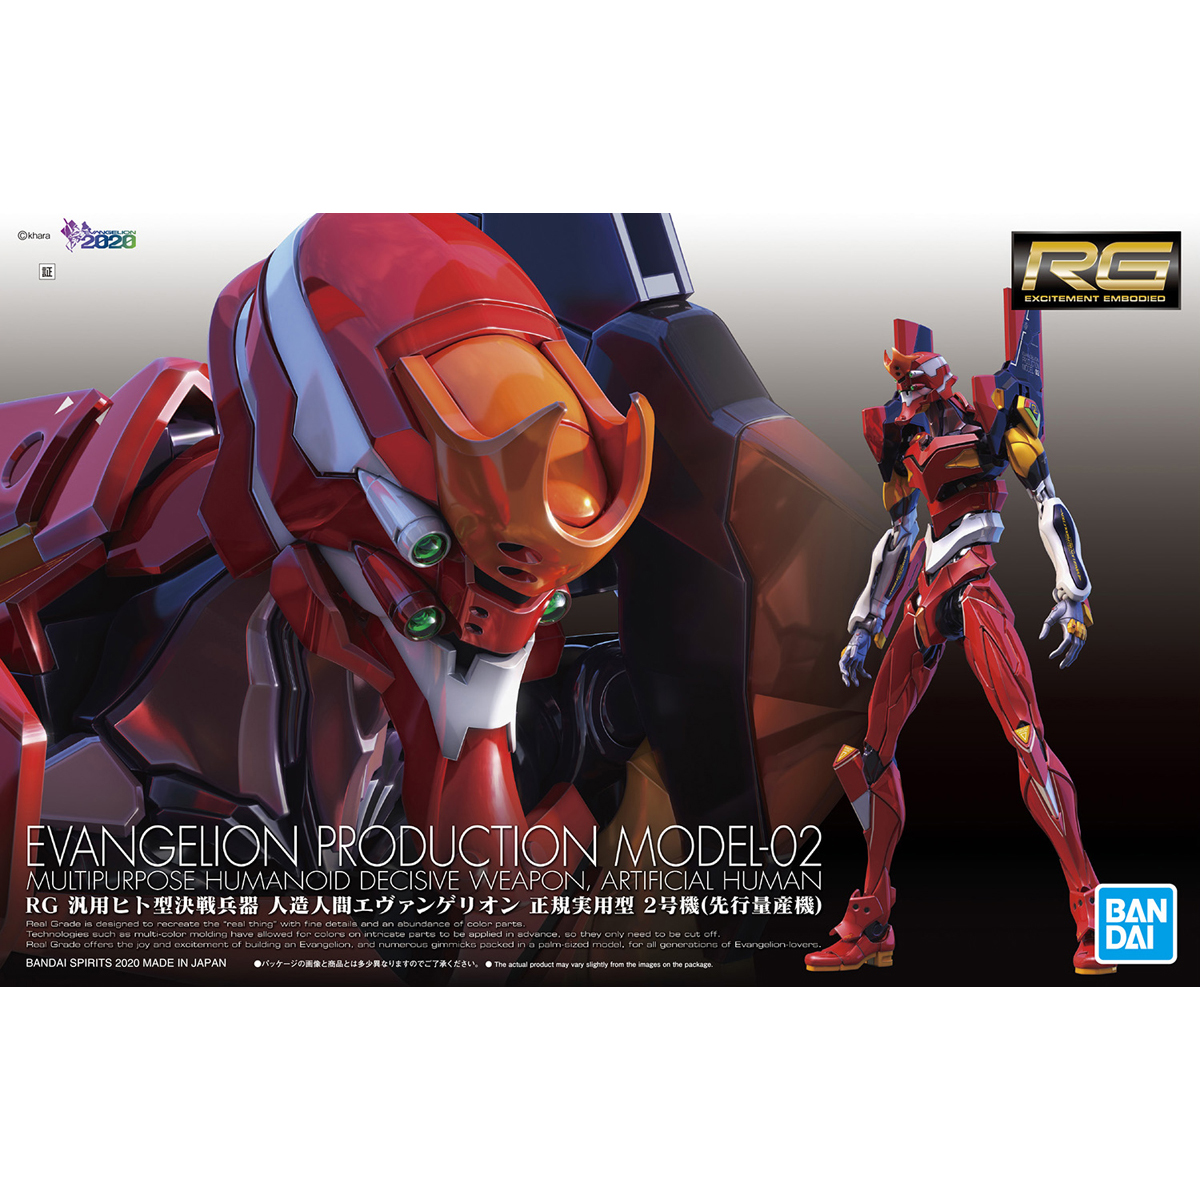 RG All-Purpose Humanoid Decisive Battle Weapon Artificial Human Evangelion Production Unit-02